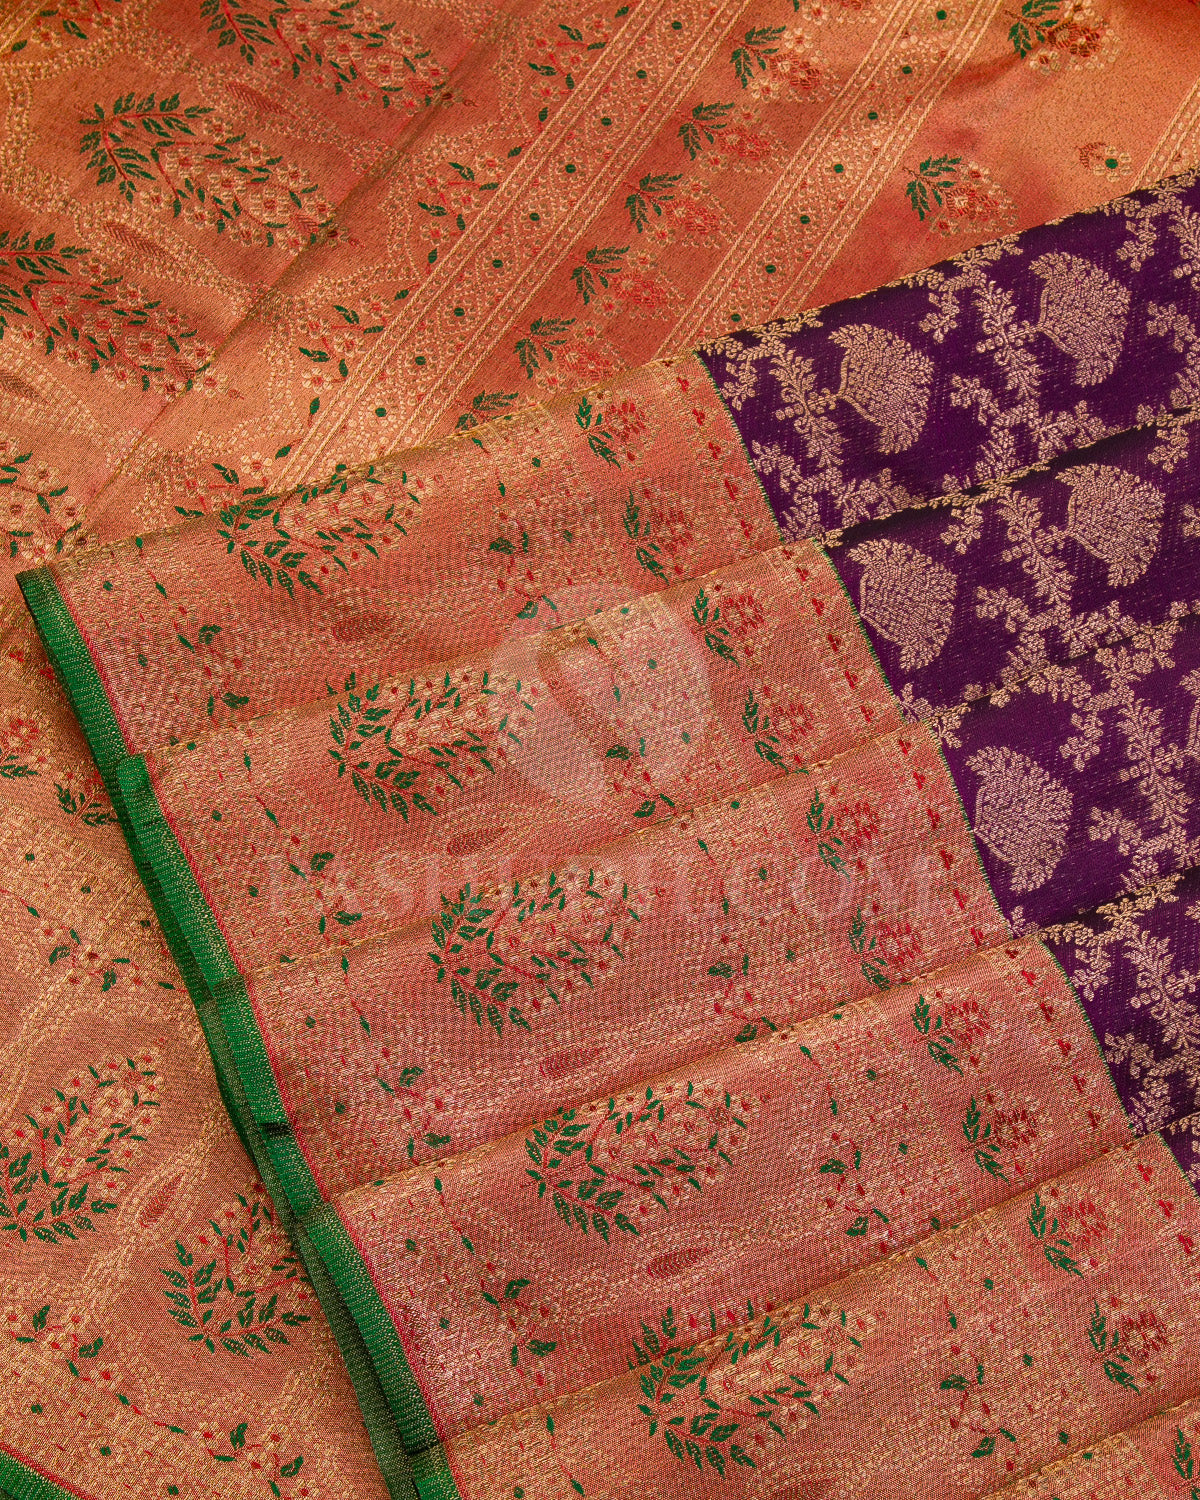 Violet and Red Kanjivaram Silk Saree with Tissue Border - S925